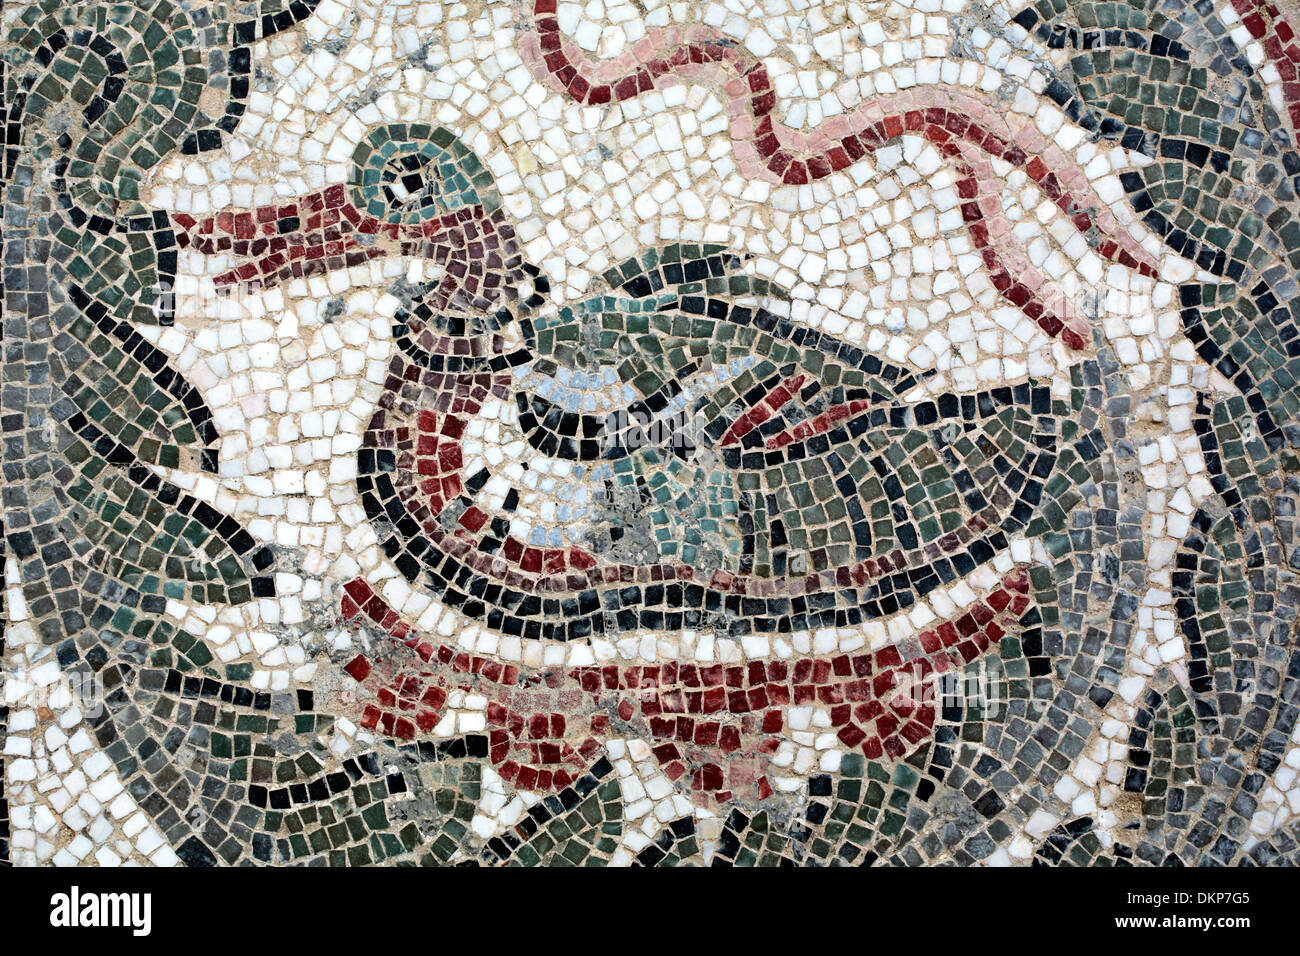 Roman floor mosaic, Villa Romana del Casale, Piazza Armerina, Sicily, Italy Stock Photo